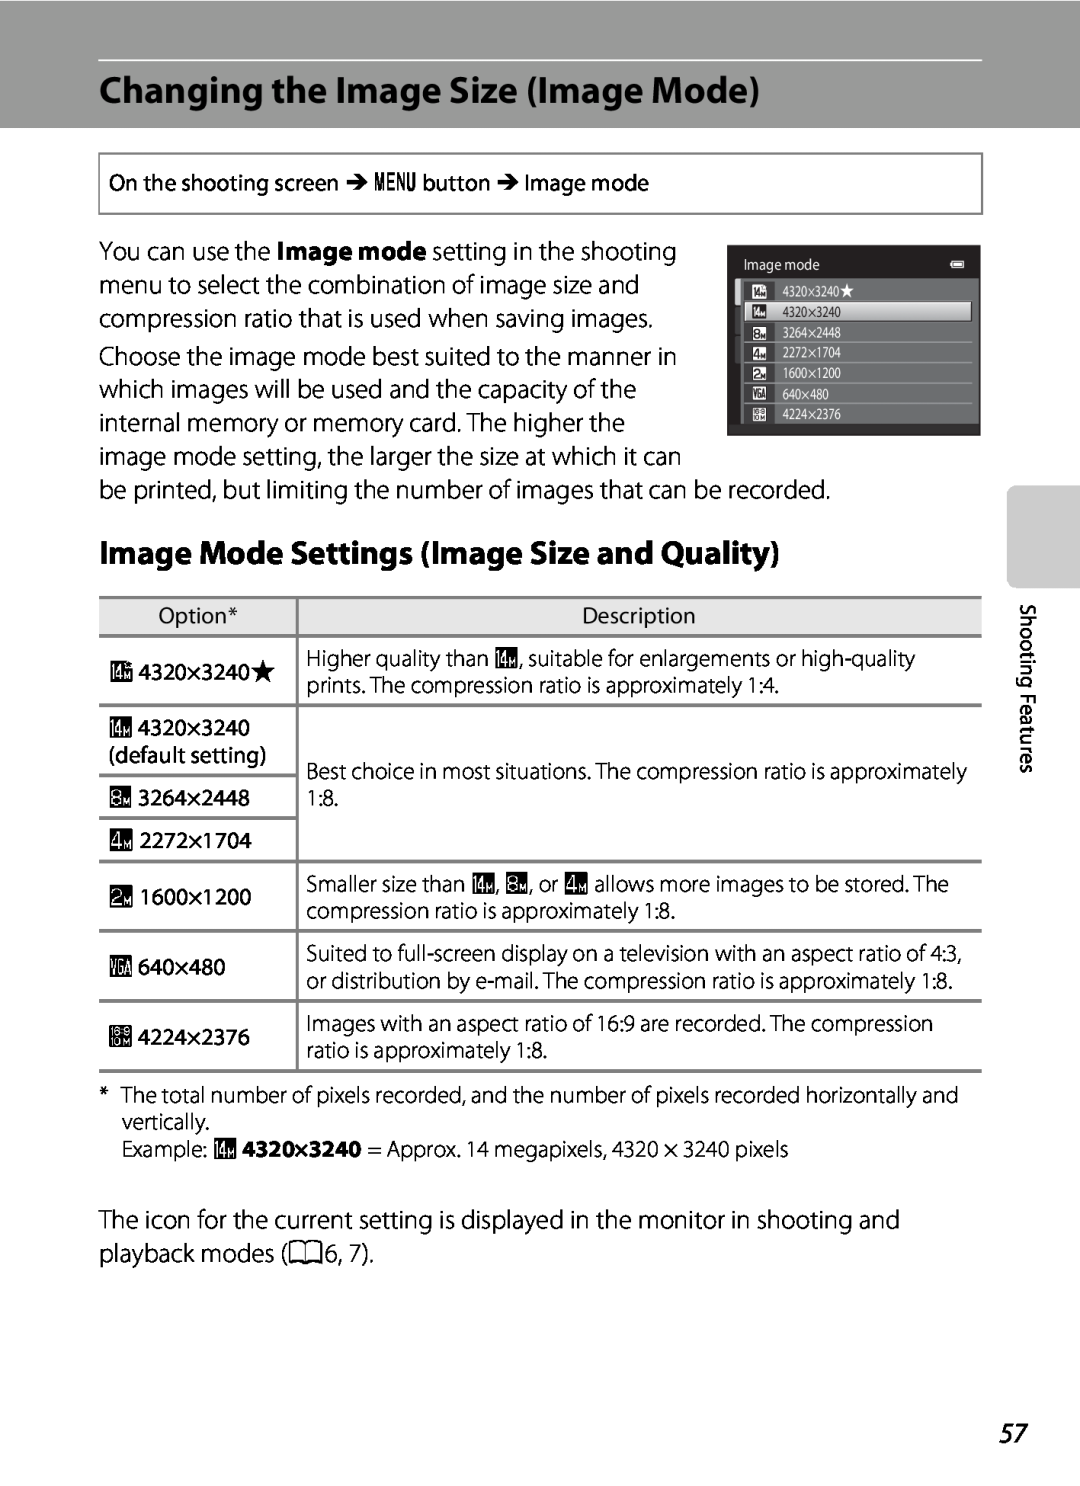 Nikon S2600 manual Changing the Image Size Image Mode, Image Mode Settings Image Size and Quality 